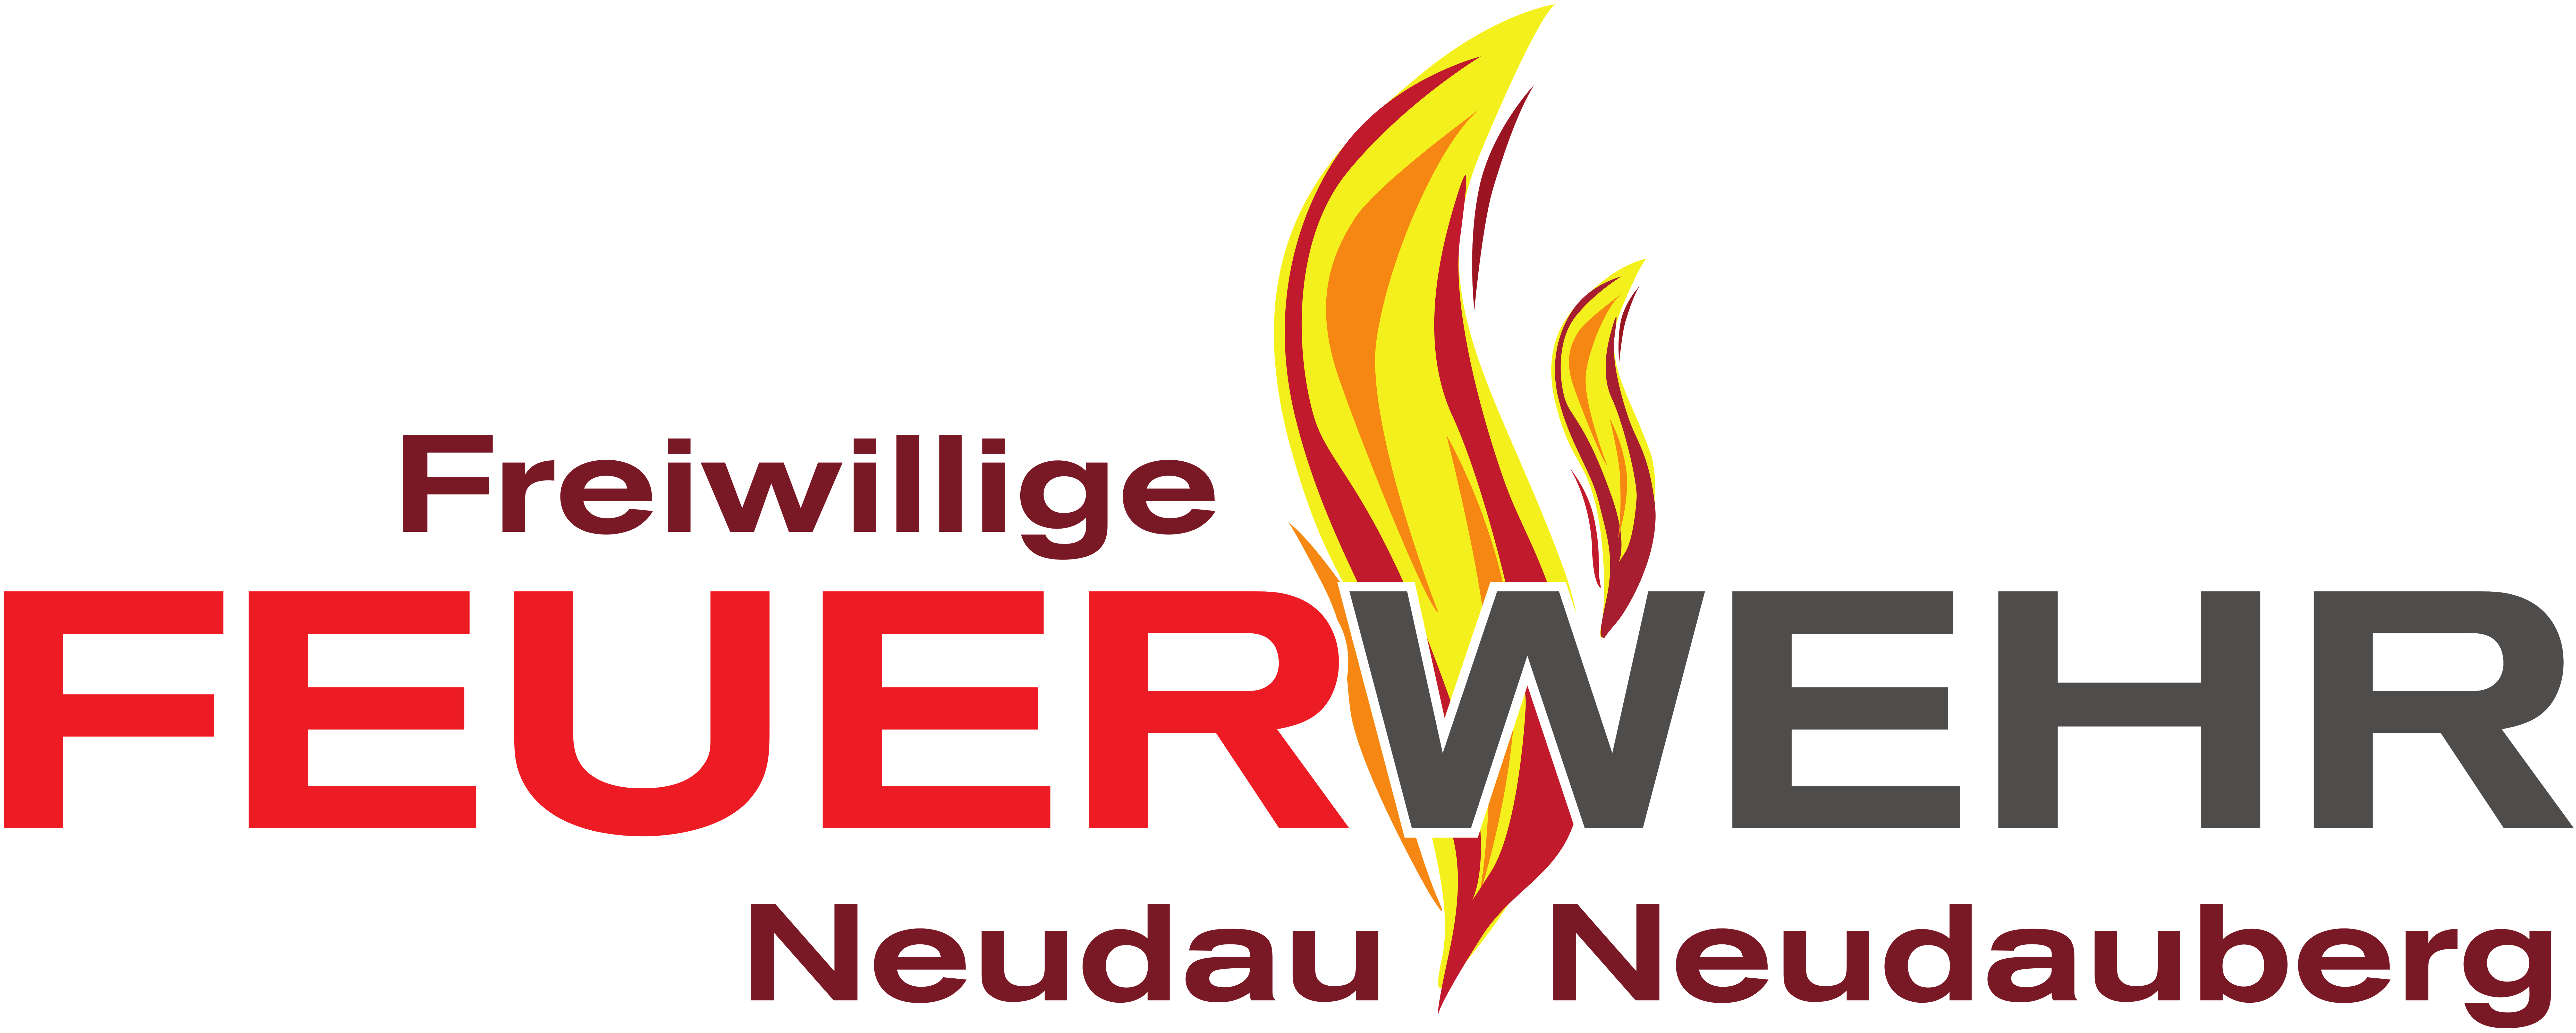 Freiwillige Feuerwehr Neudau-Neudauberg